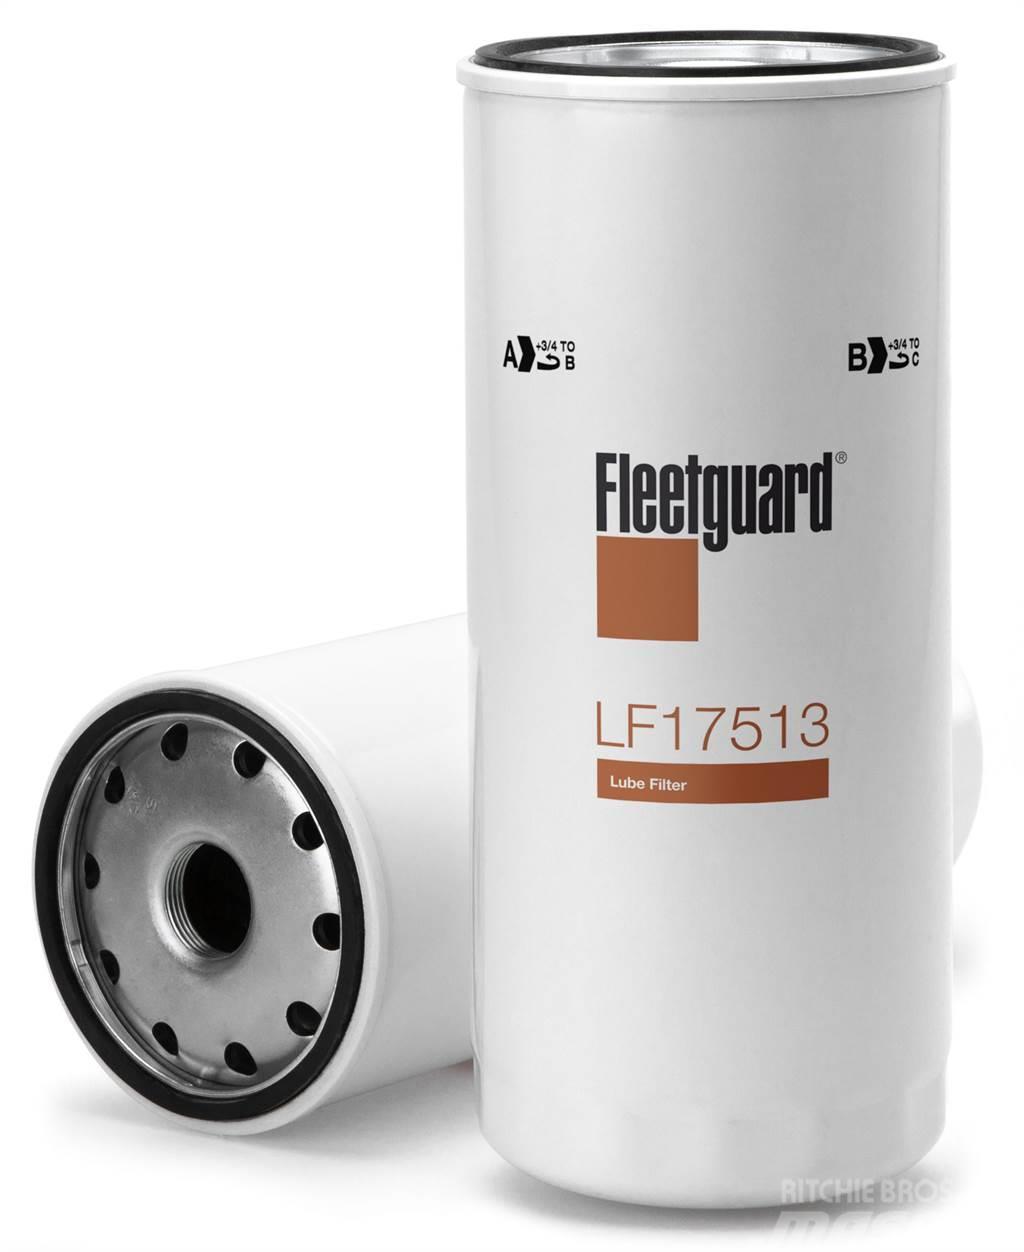 Fleetguard oliefilter LF17513 Citi